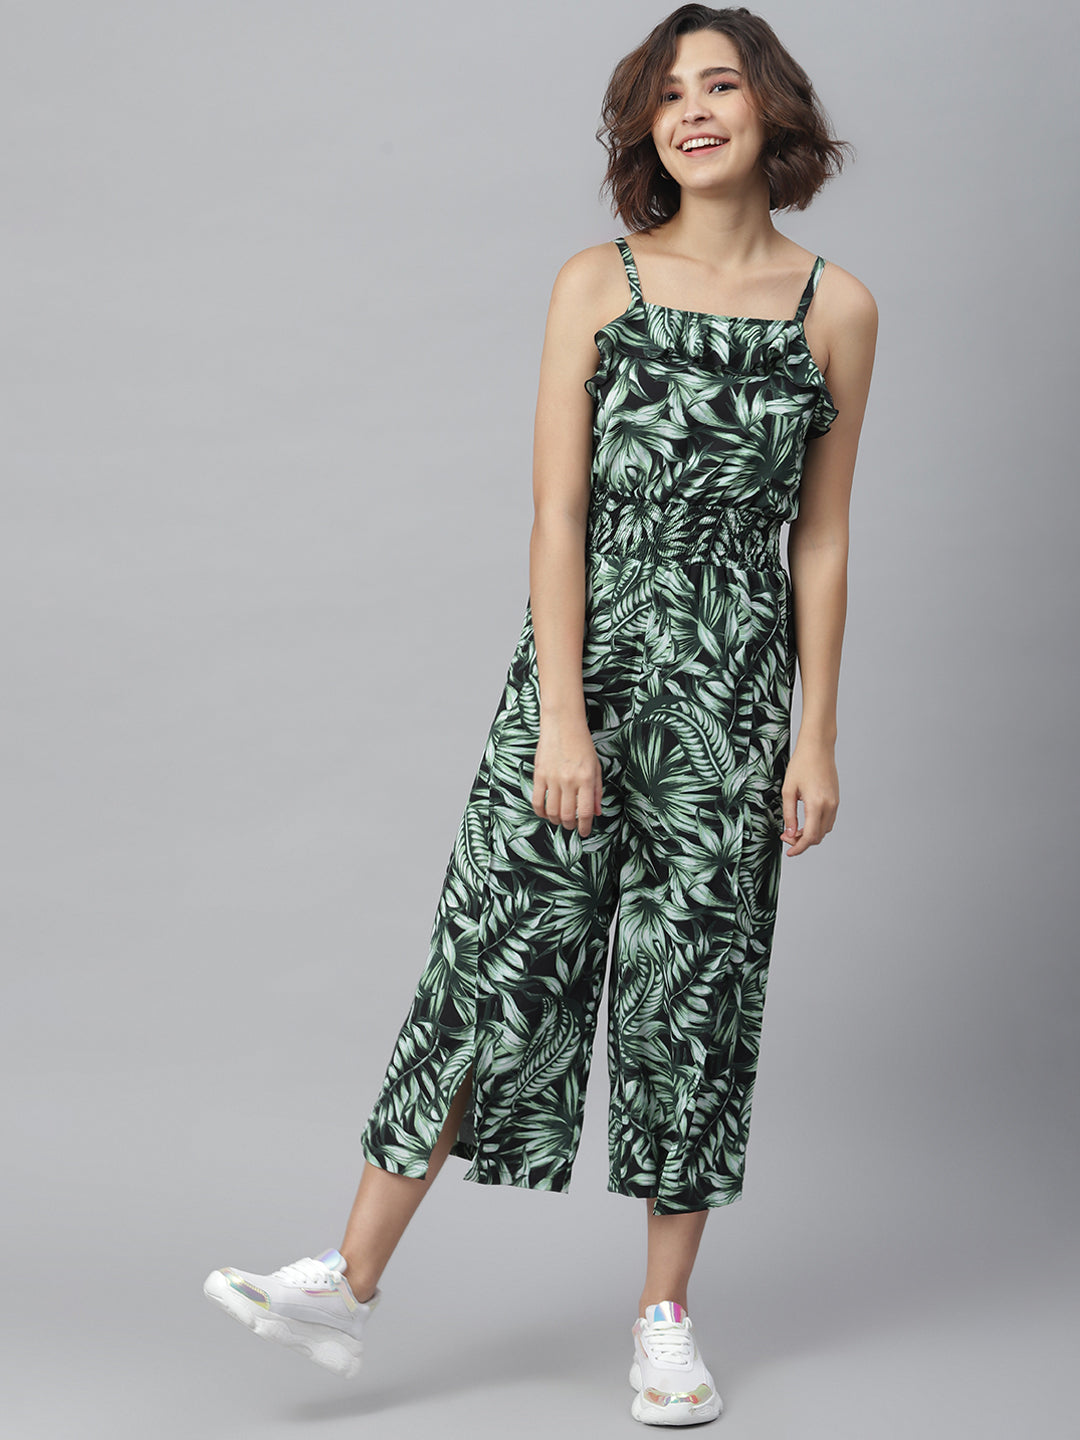 Women's printed Jumpsuit with slit Pants - StyleStone